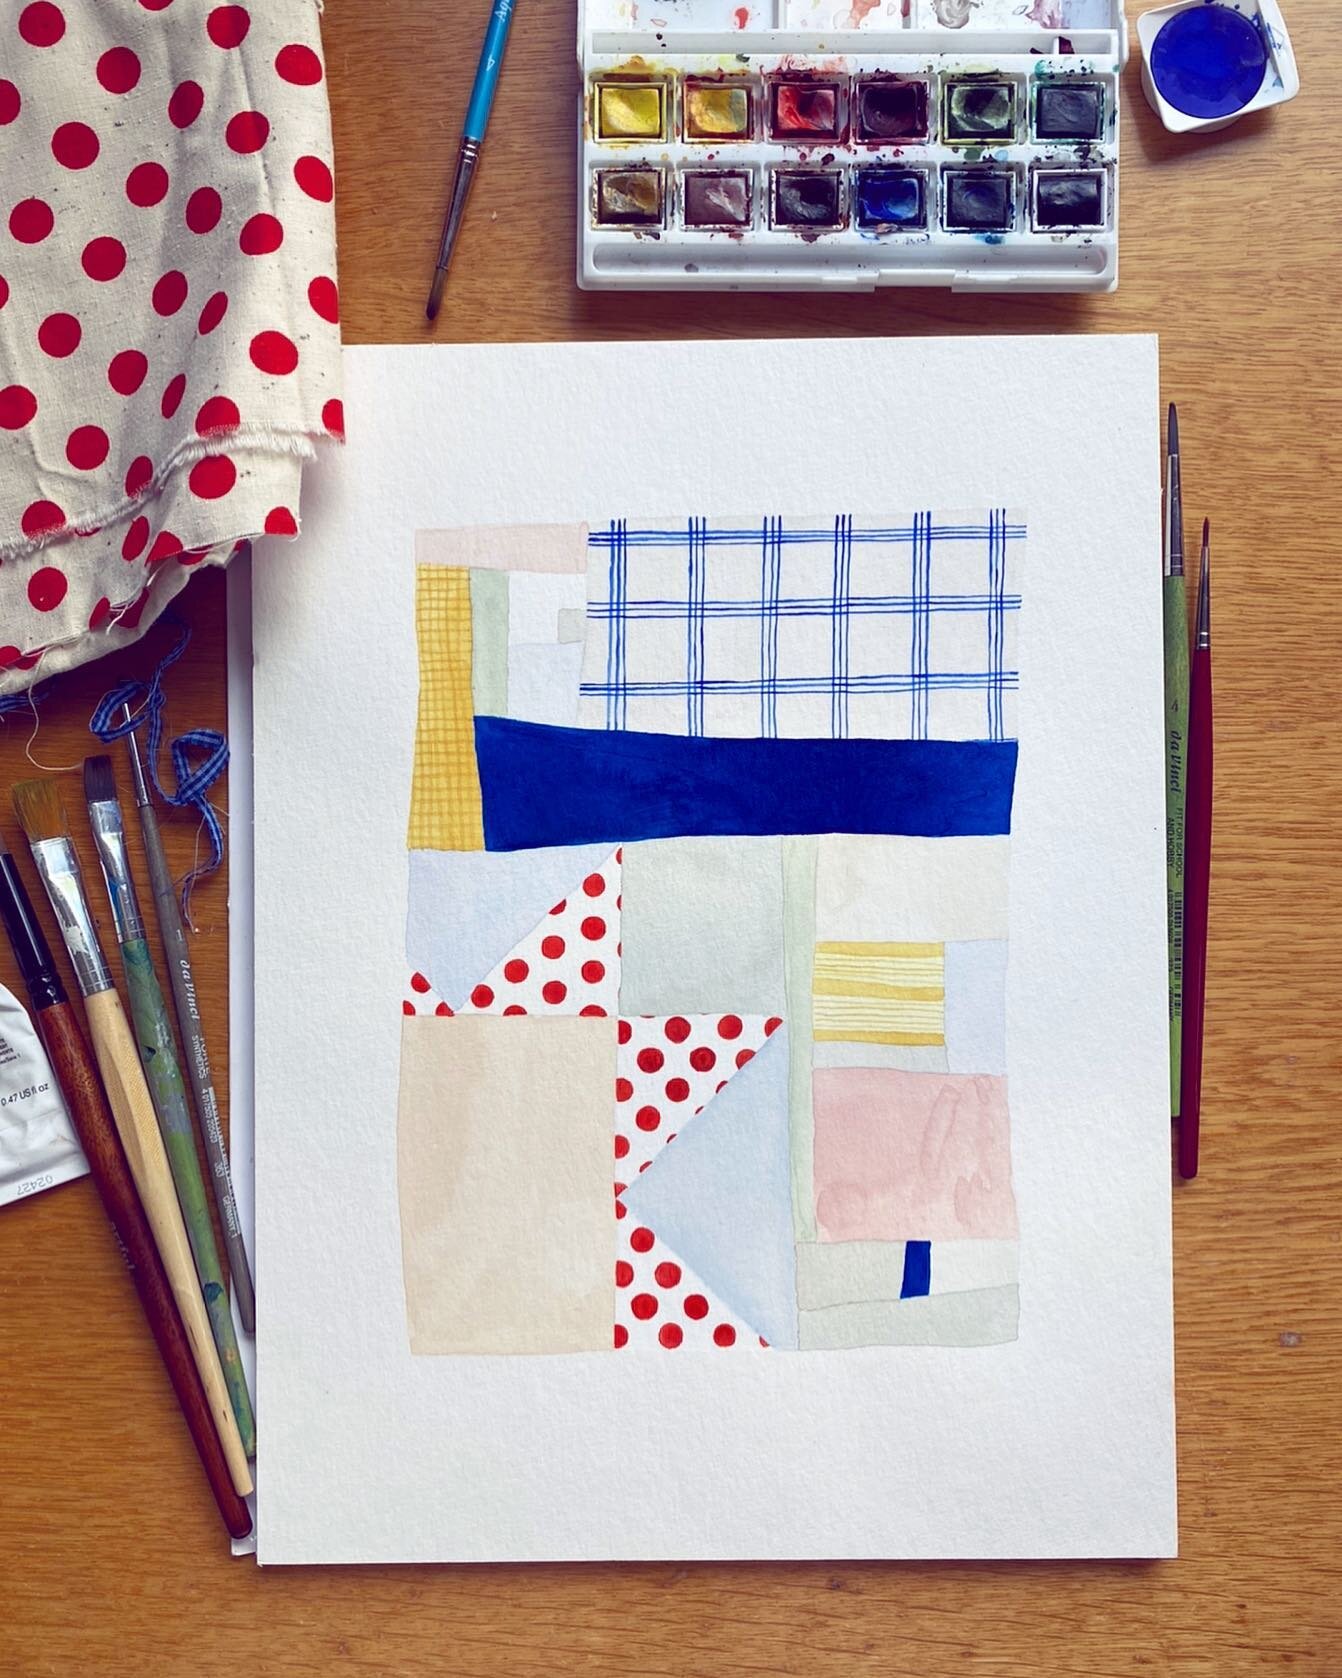 quilt painting /// akvarell, gouache og akrylblekk p&aring; papir, 21x29 cm
🍒🍌🍑💦🍋🍐🍓
.
.
.
.
.
.
.
#watercolour #watercolourpainting #gouache #sketch #drawing #textileart #quilting #quiltpattern #patchwork #patchworkdrawing #textileportraits #i